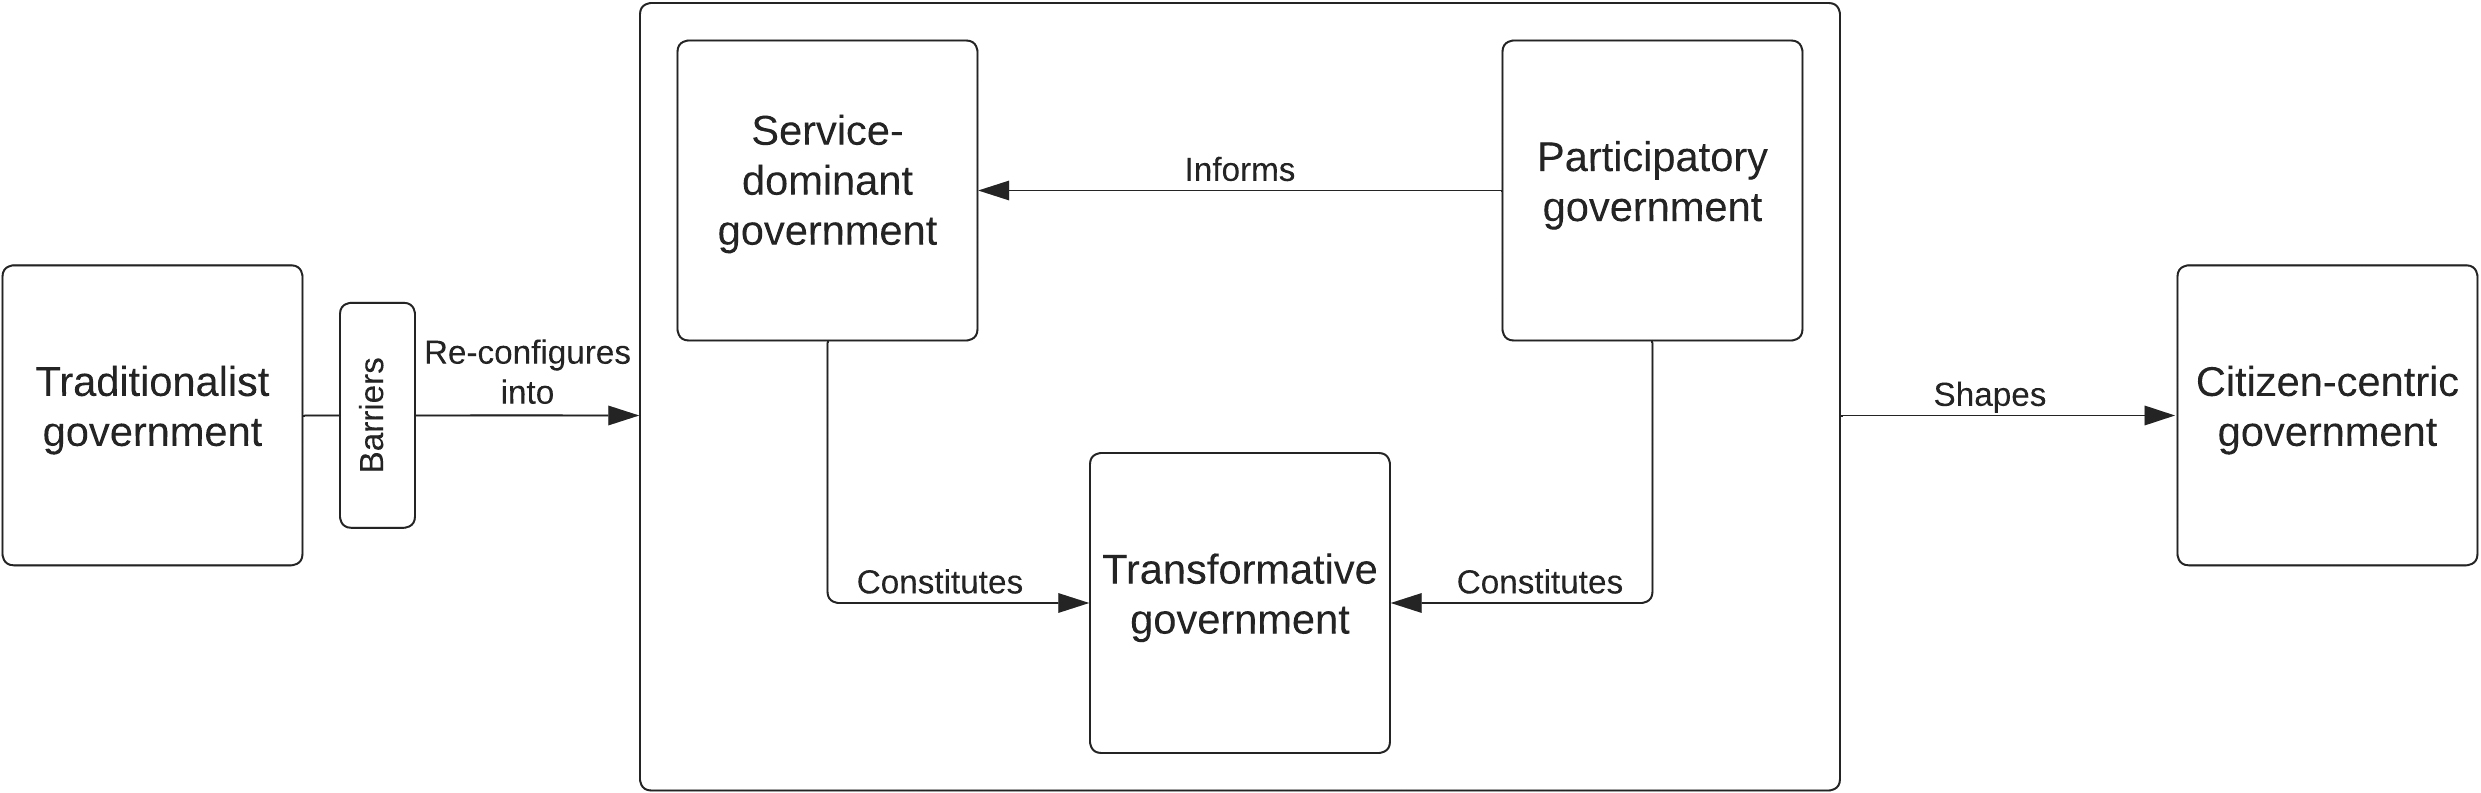 An integrative framework of ideal government types.